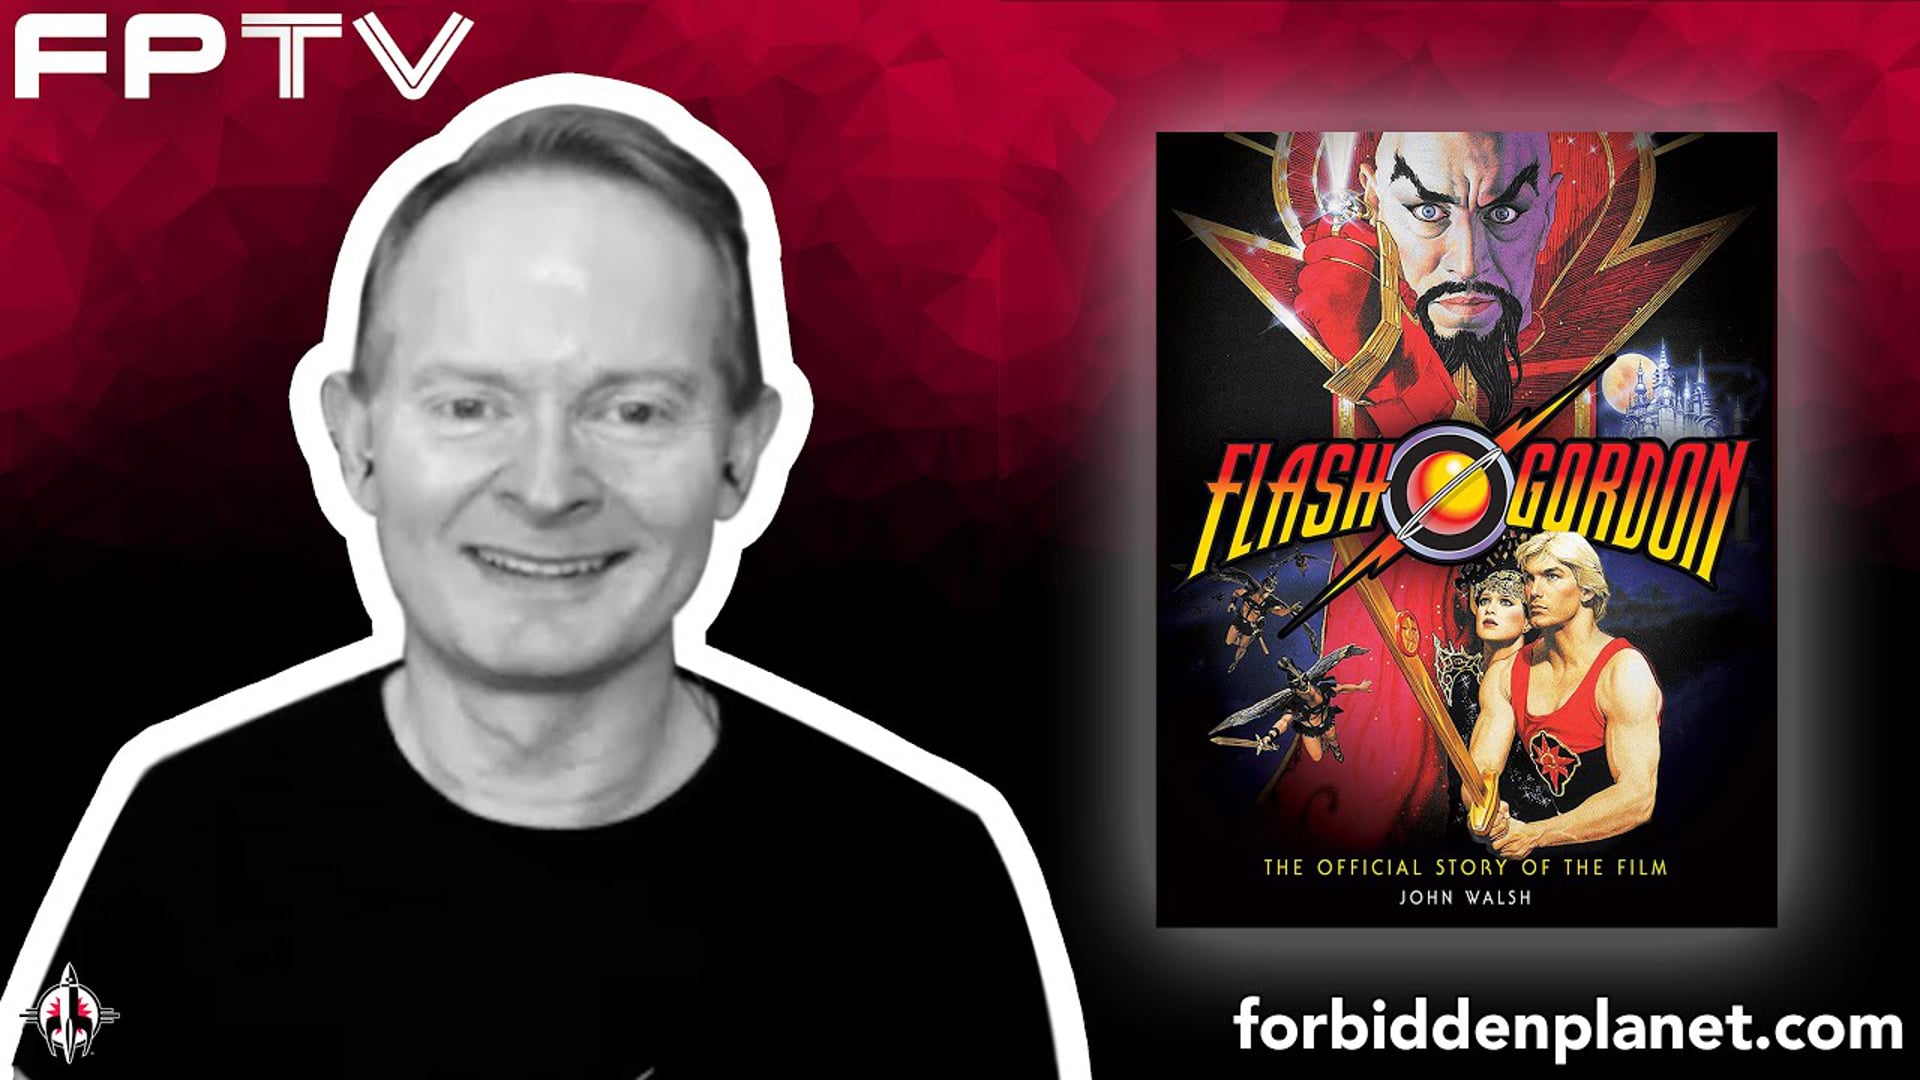 FPTV: "Gordon's Alive!" John Walsh Reveals The Secret History Of Flash Gordon